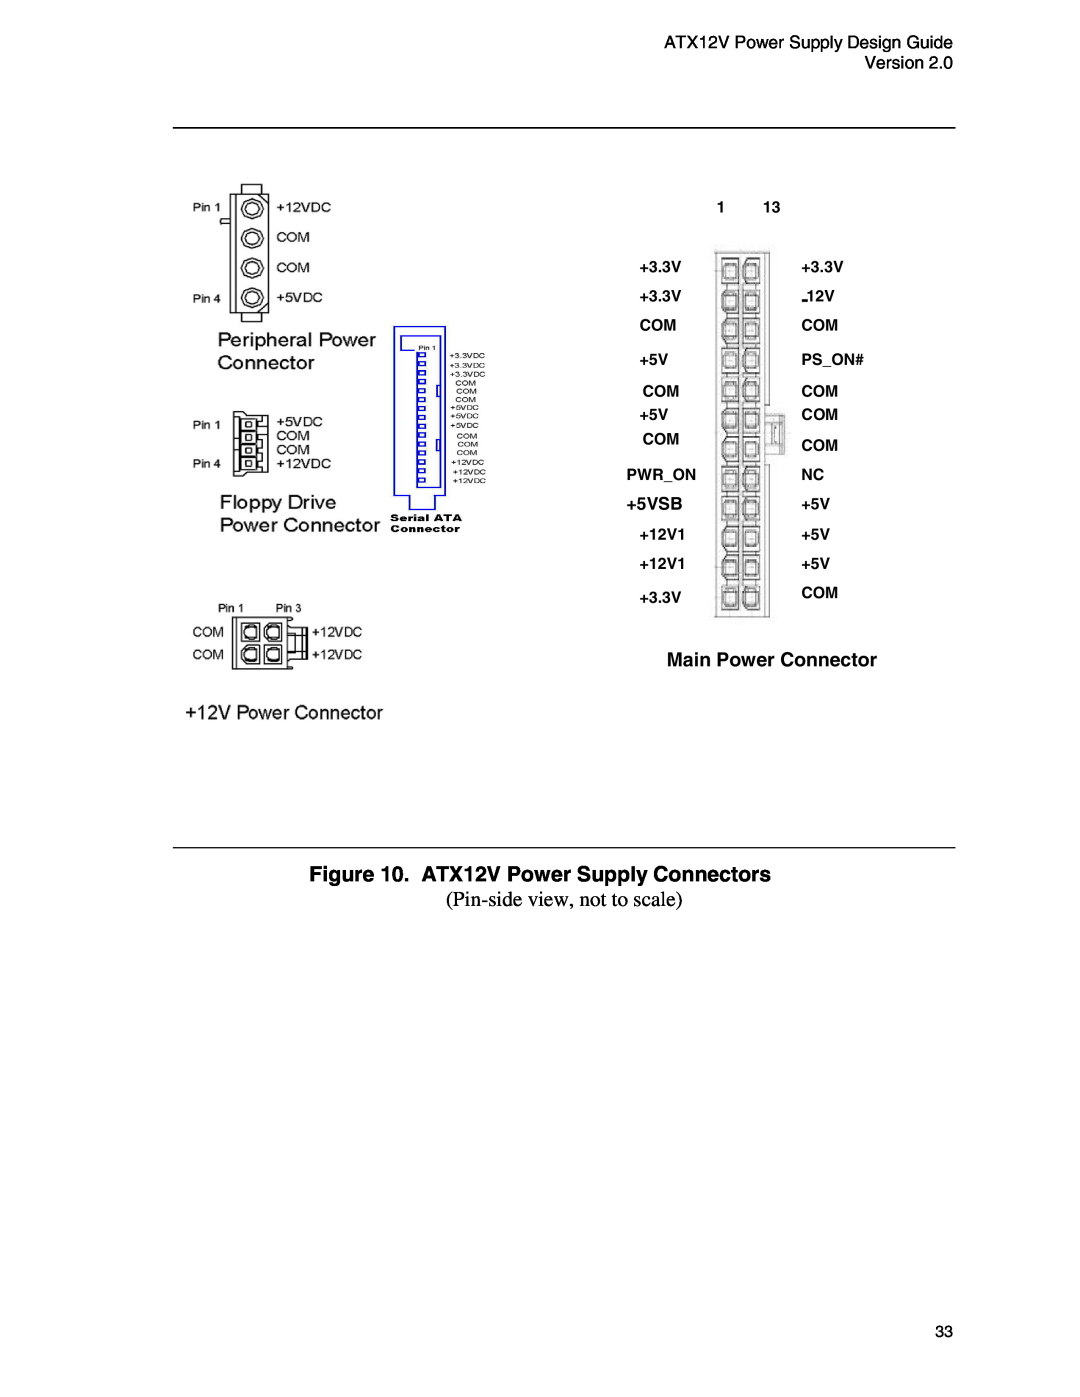 Intel ATX12V manual Main Power Connector, Pson# 